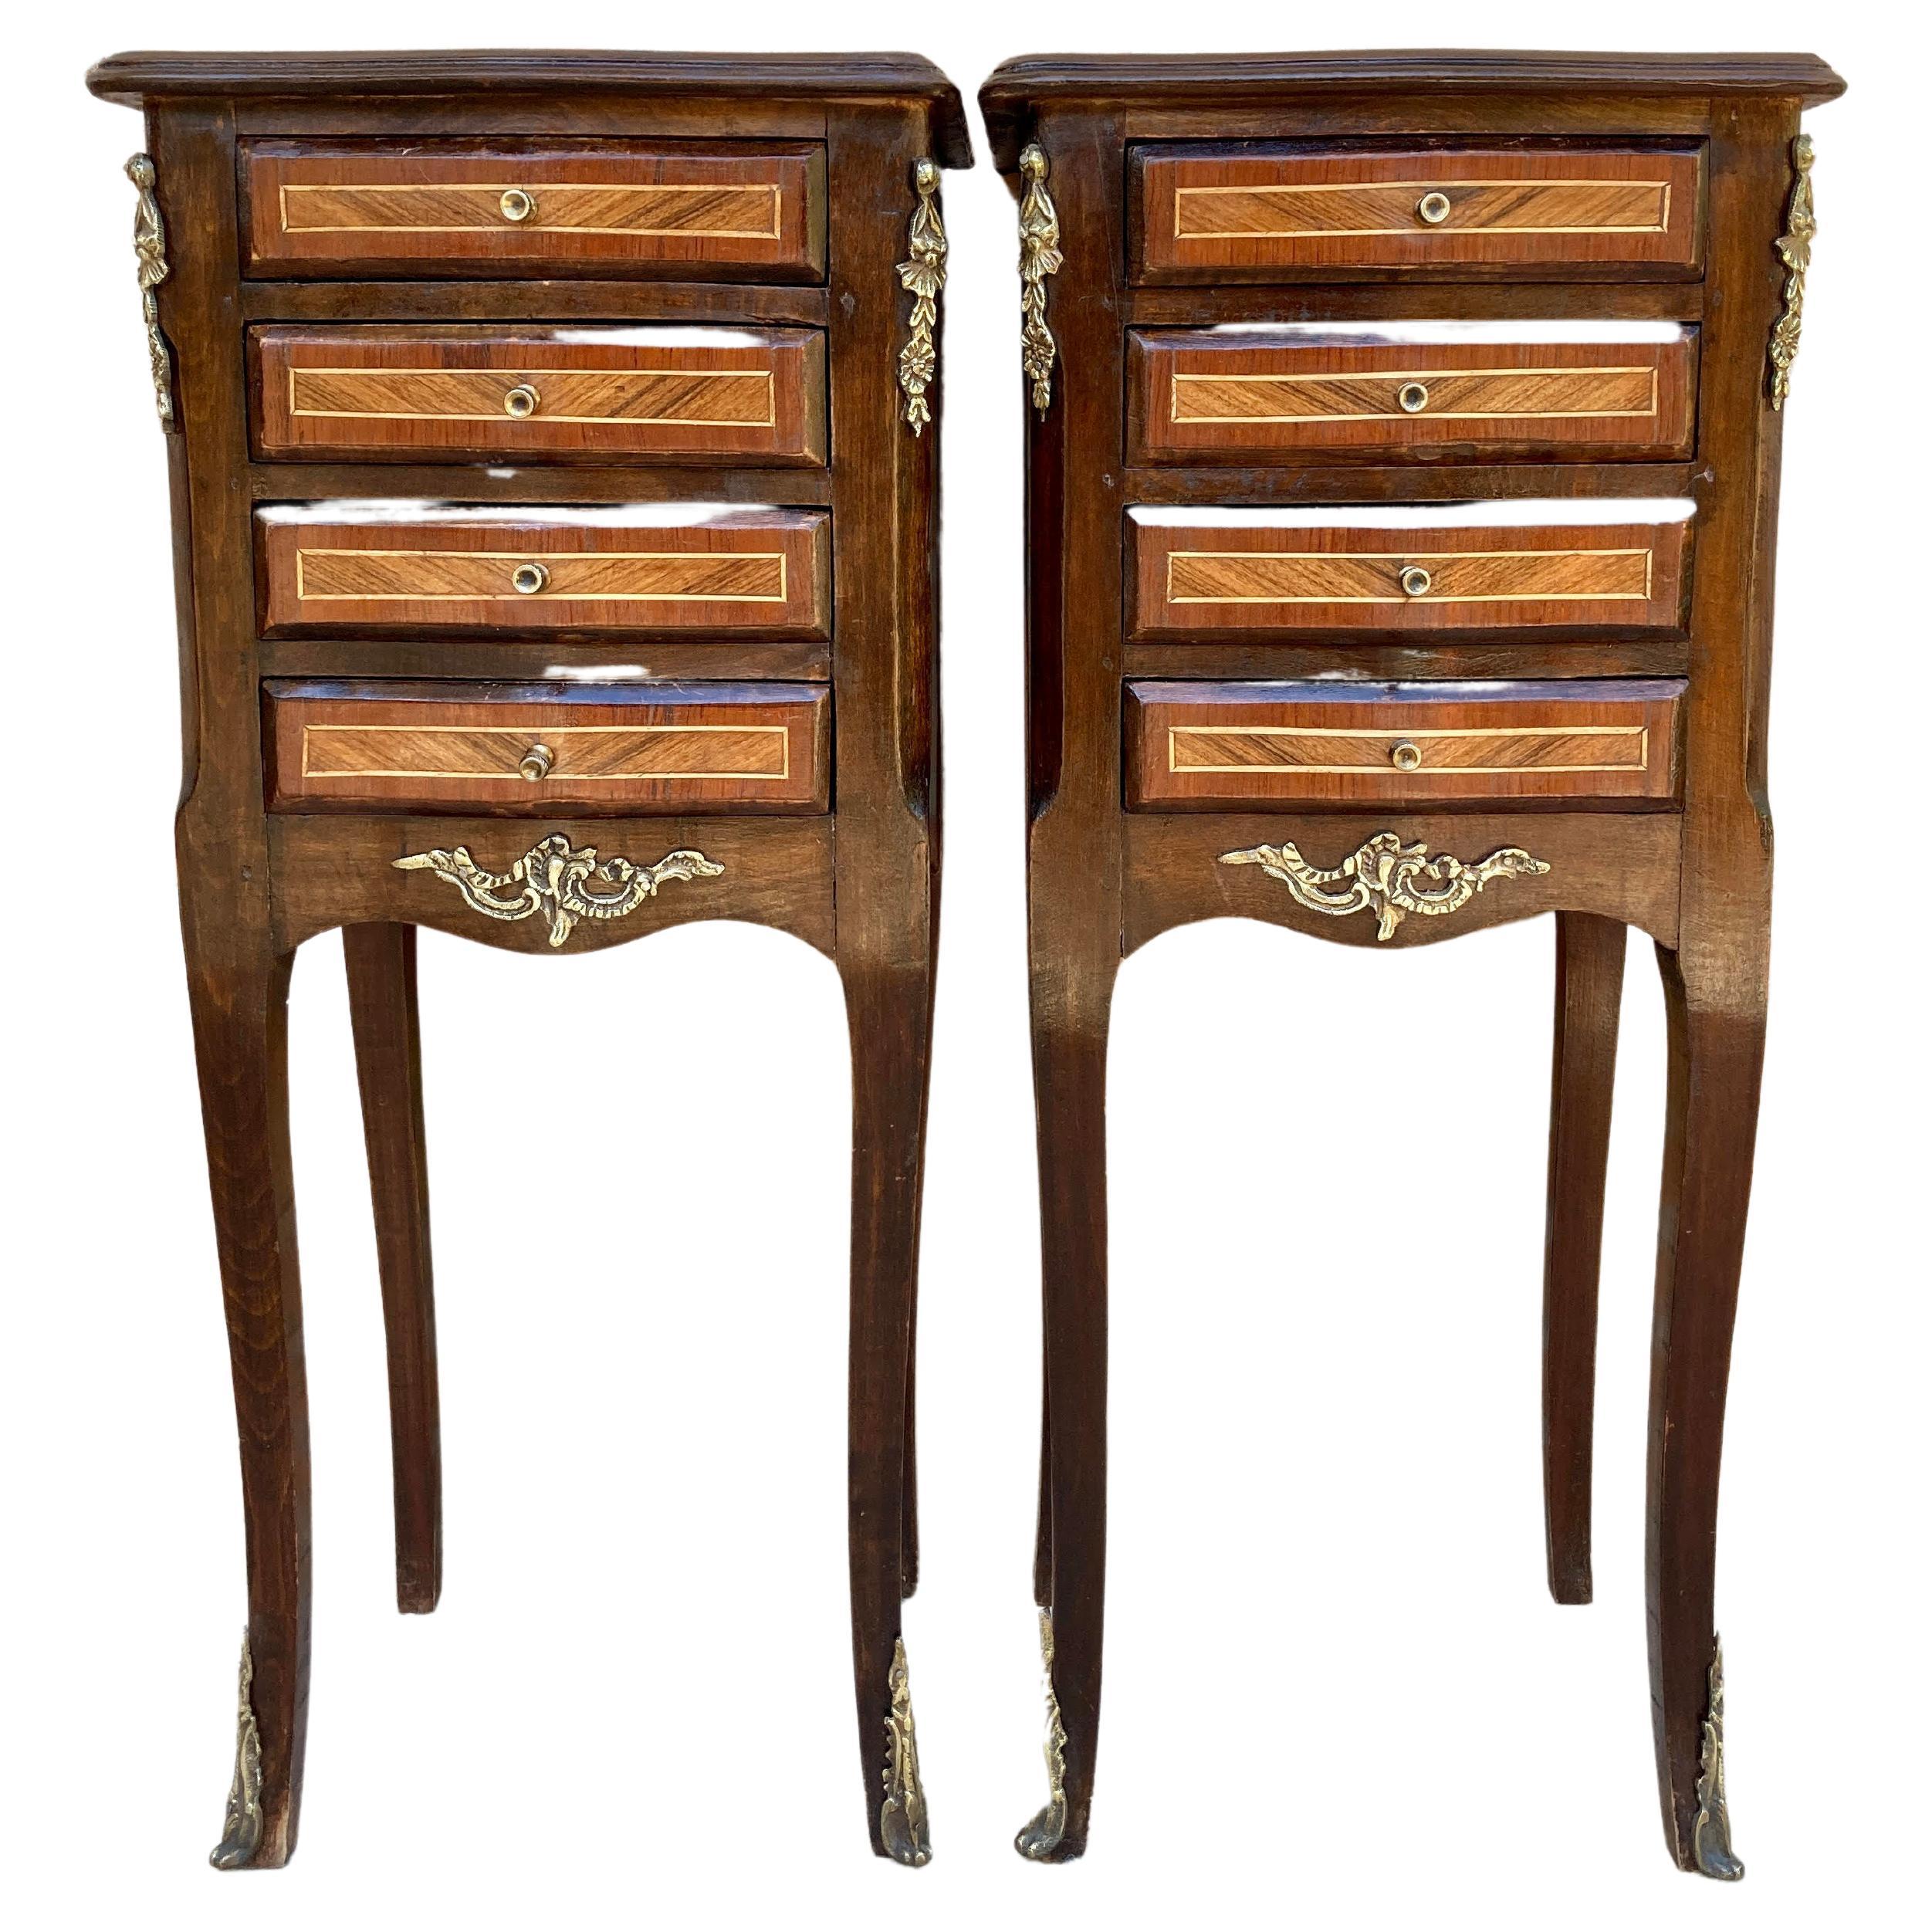 Pair of French Louis XV Style Tulipwood Veneer Bedside Tables or Nightstands